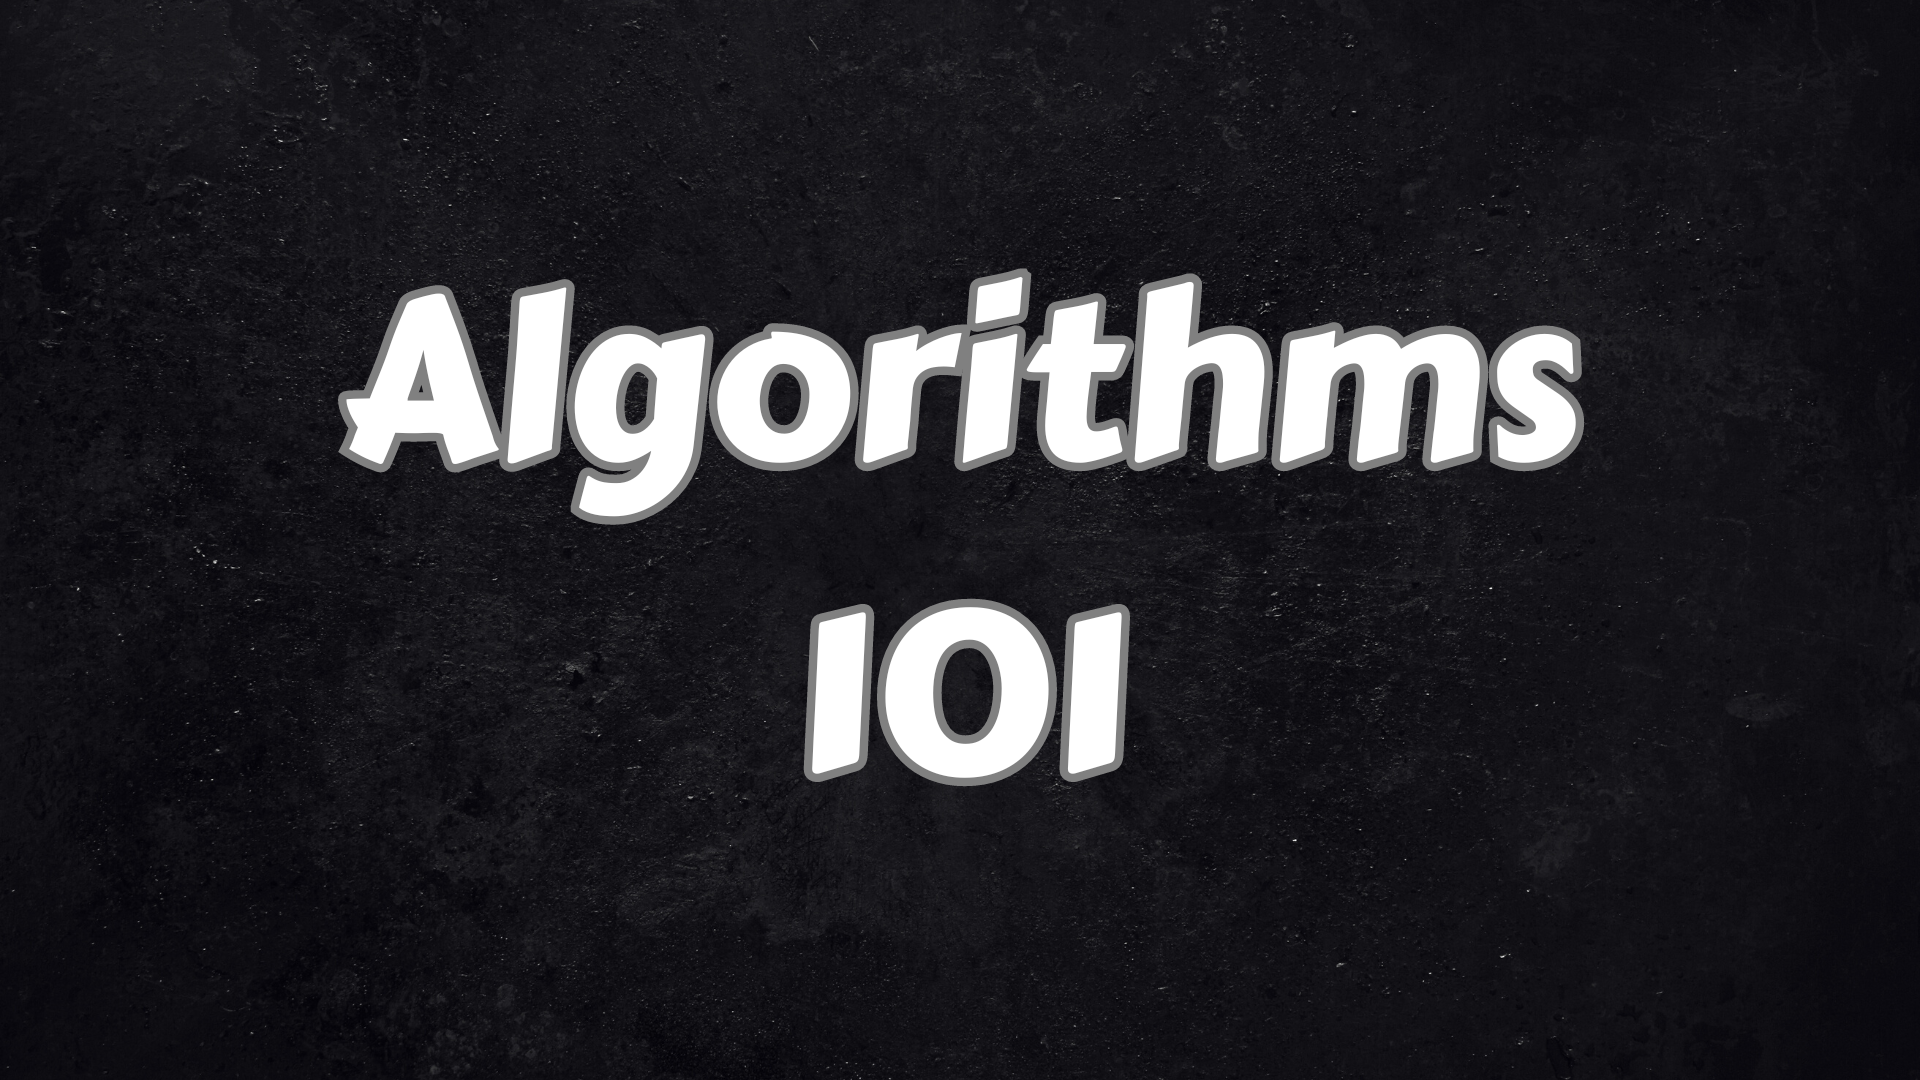 Foundations of Algorithms